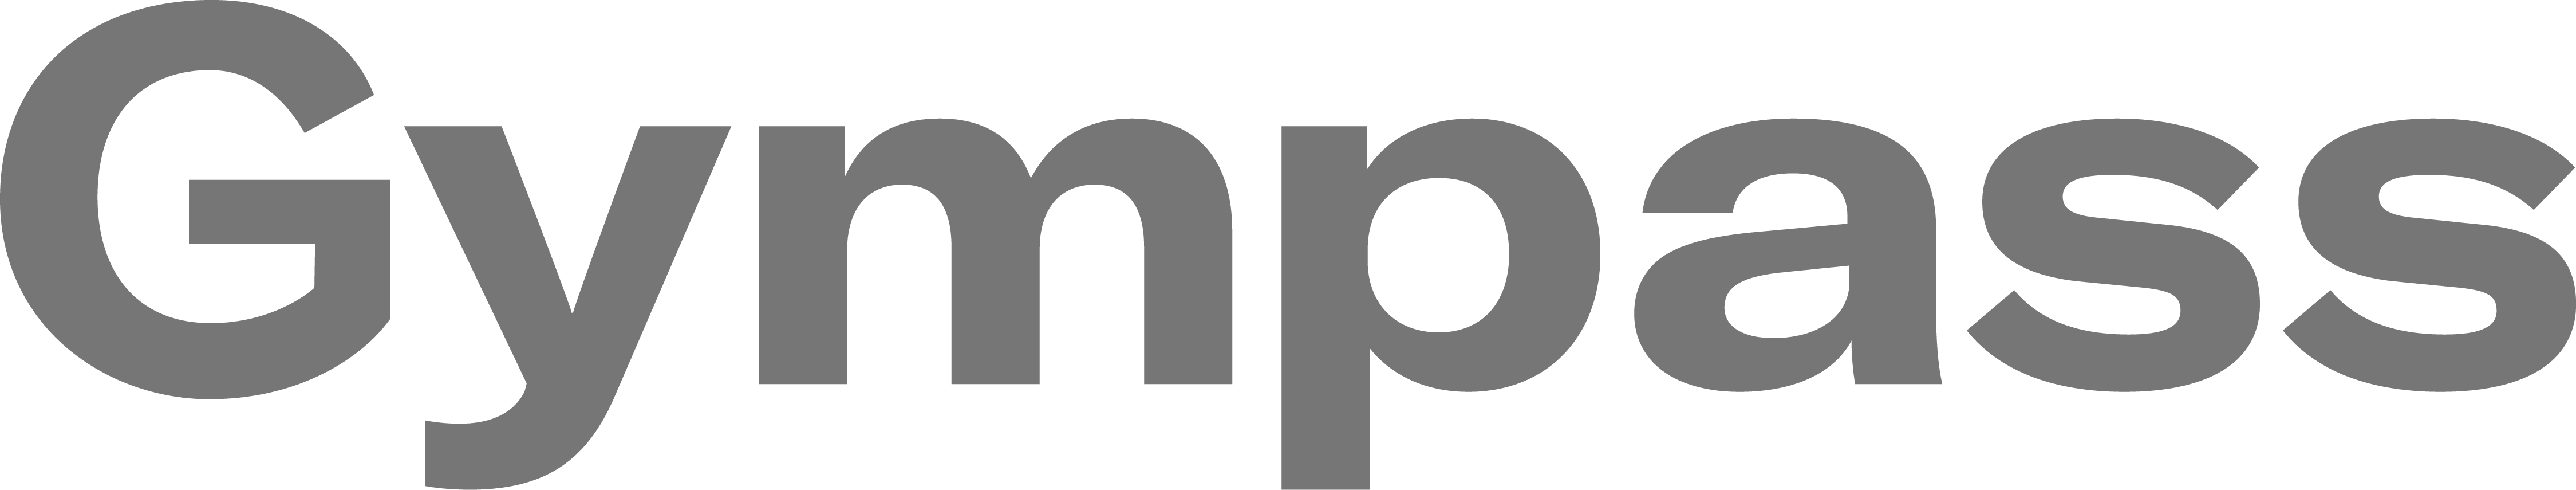 gp-logo-gray